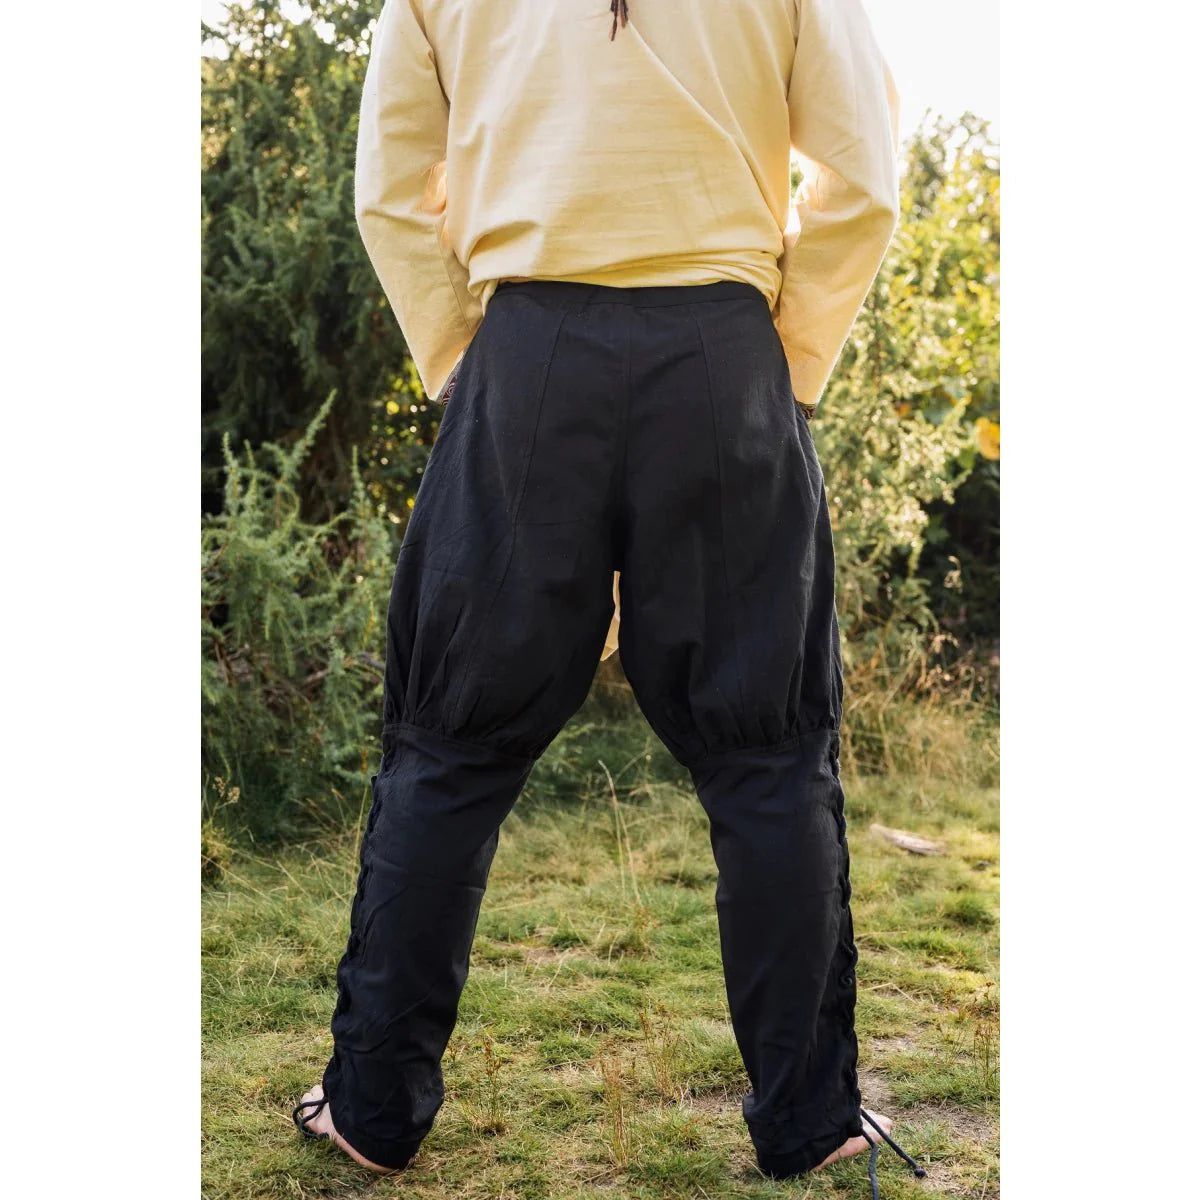 premium viking pants authentic cut in cotton with leg lacing black